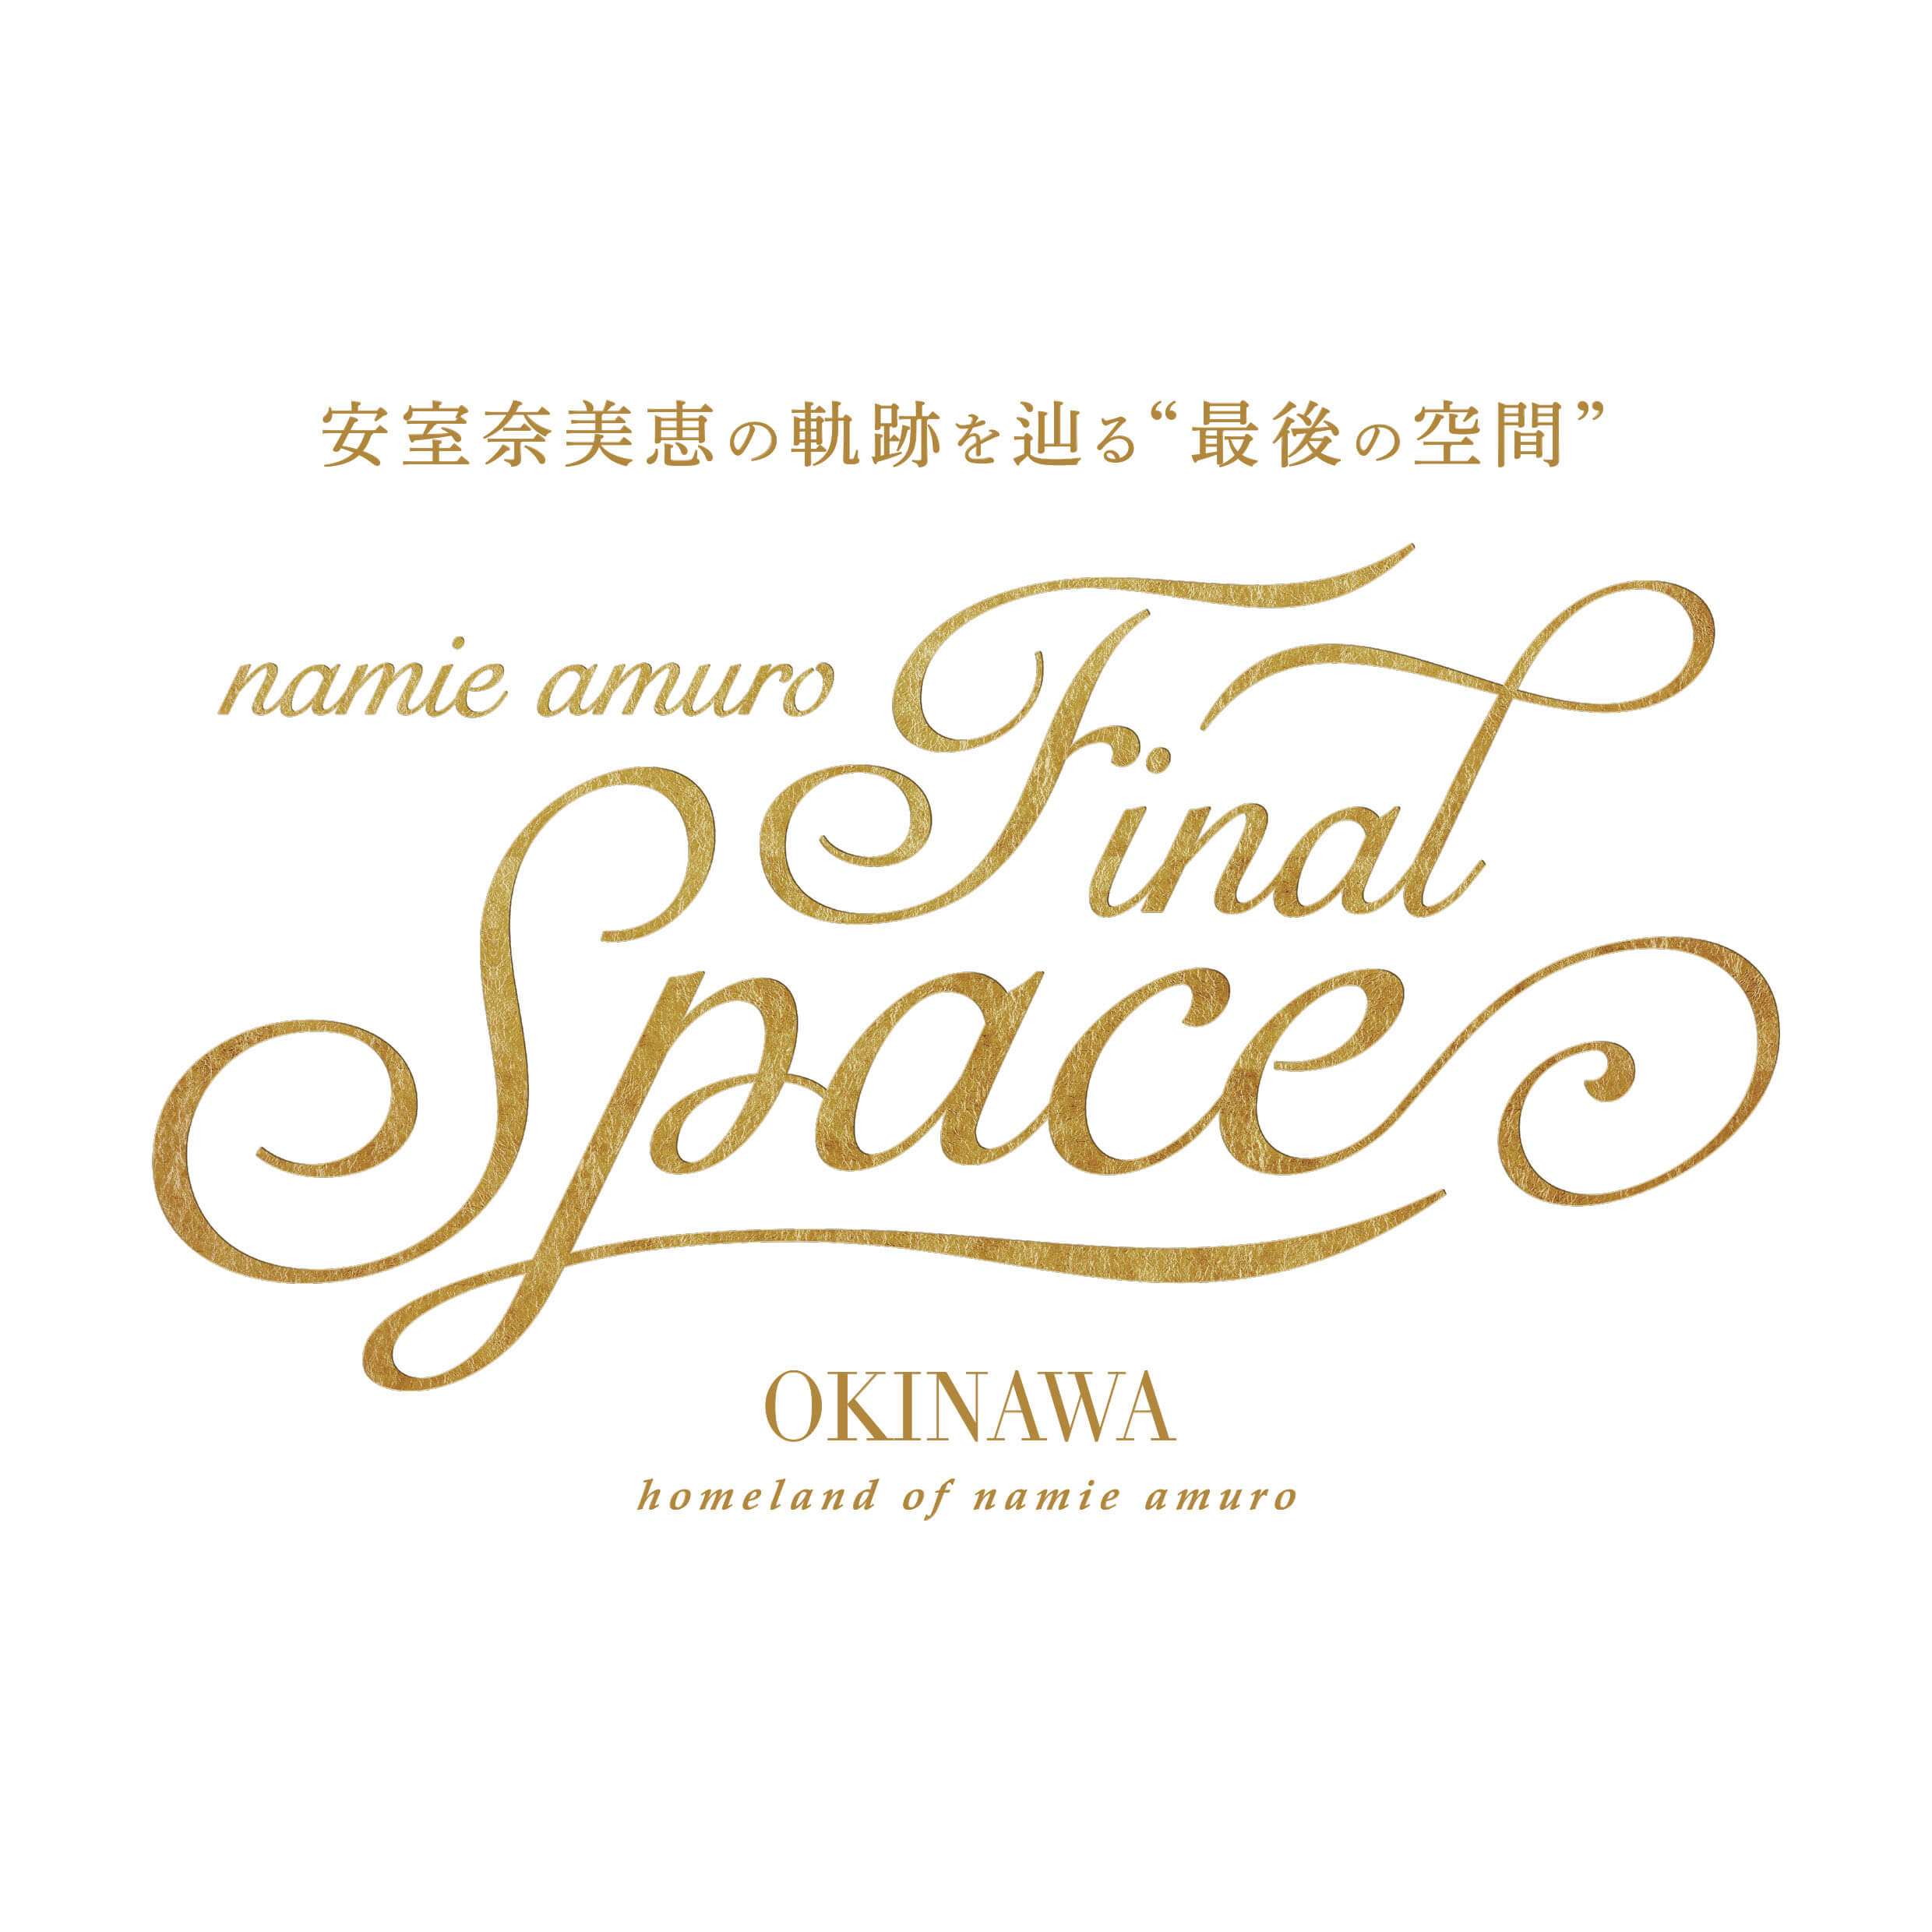 namie amuro Final Space | 株式会社プラザハウスコーポレートサイト ...